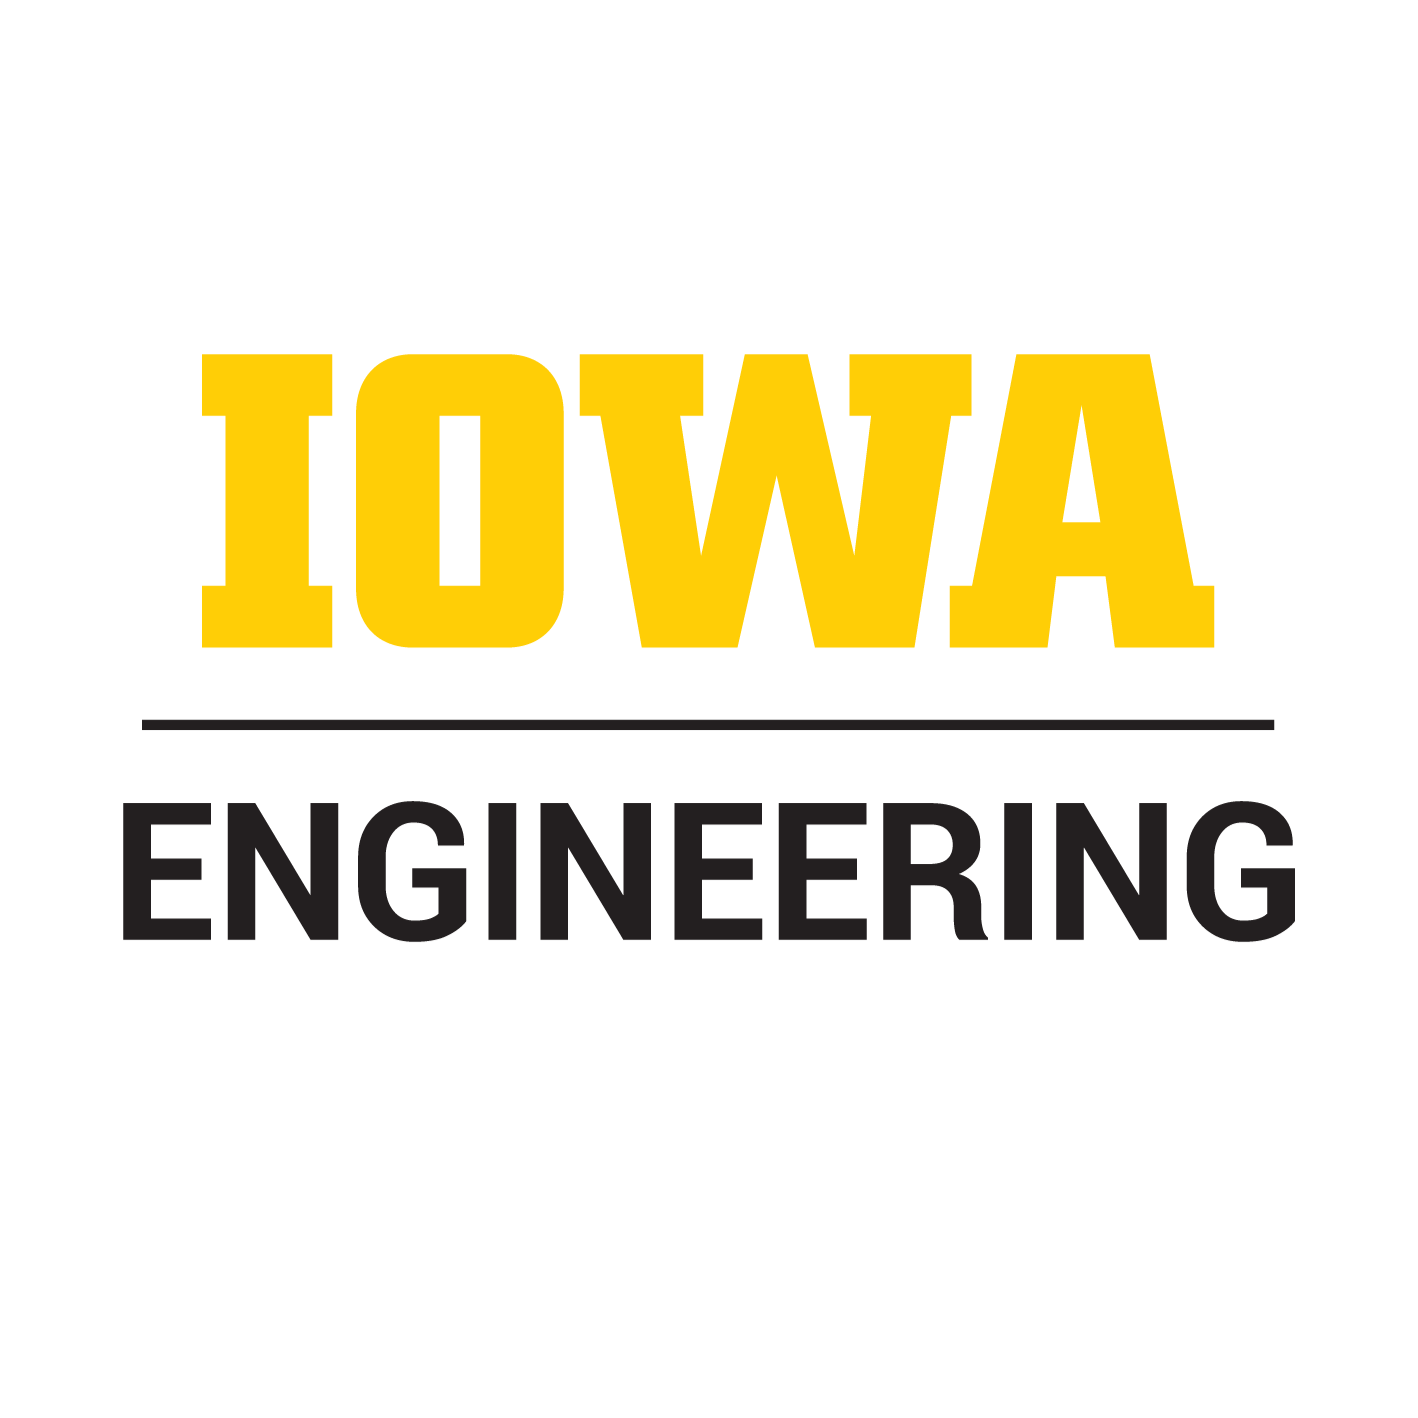 Iowa Engineering logo